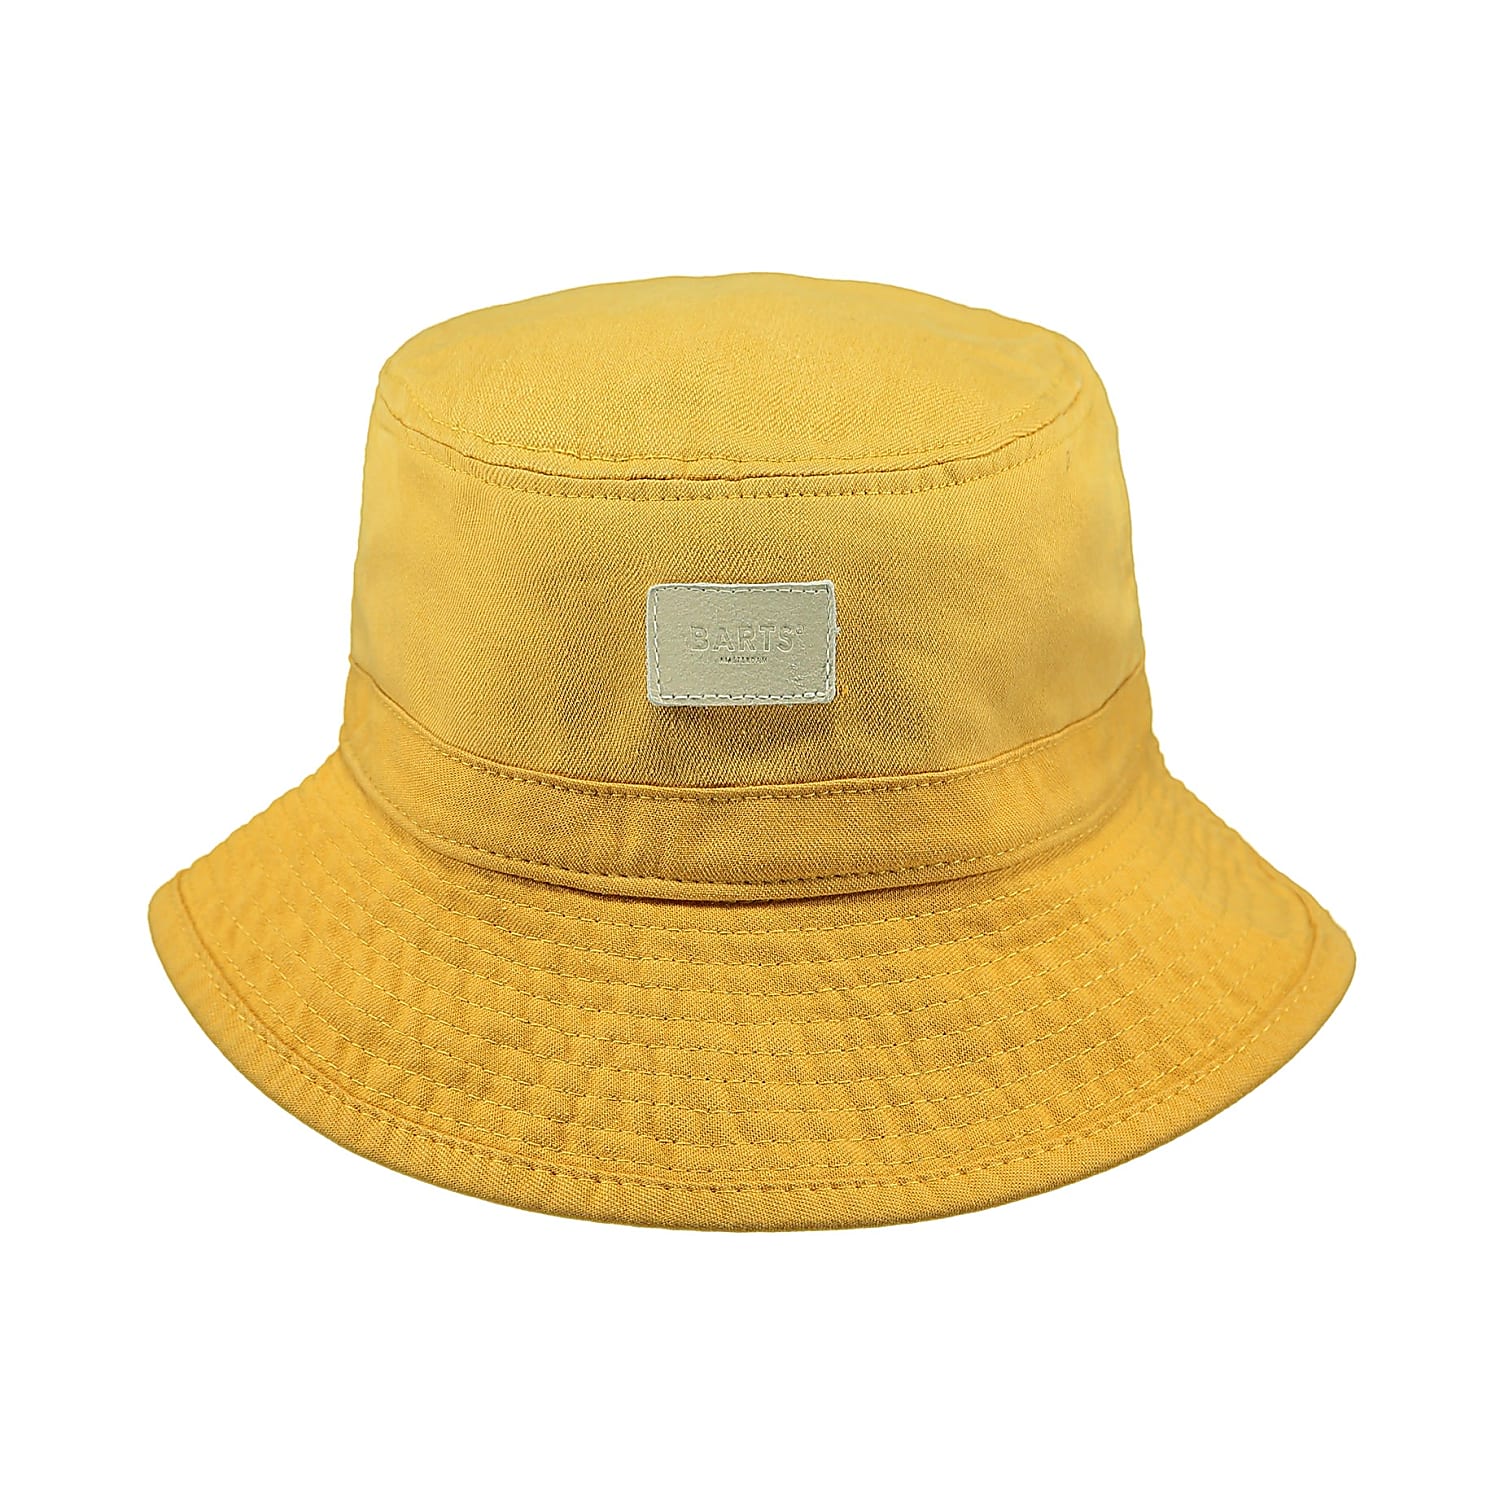 Barts KIDS cheap - Yellow HAT, and Fast OROHENA shipping